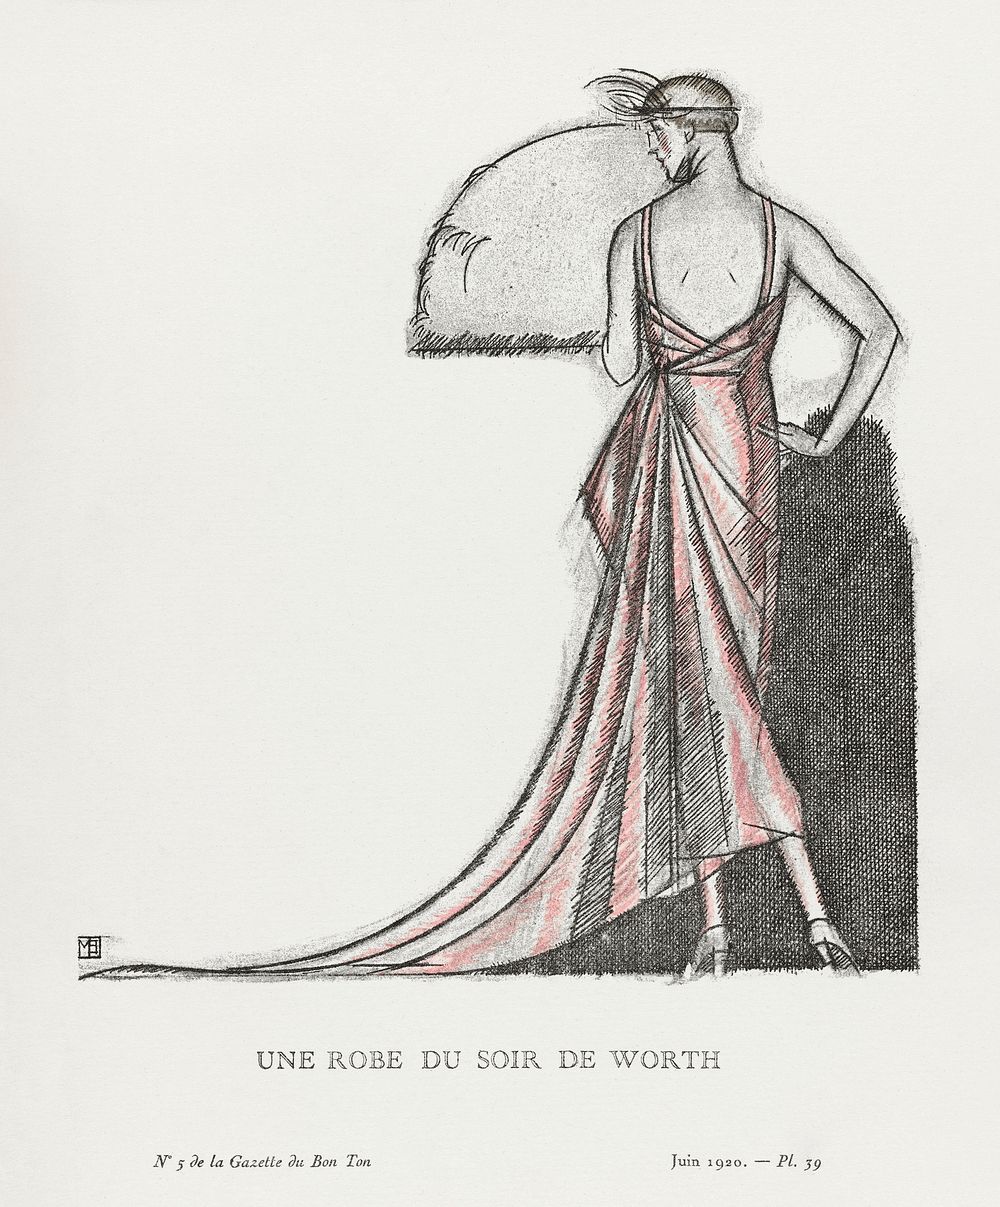 Une robe du soir de Worth (1920) print in high resolution by Bernard Boutet de Monvel, published in Gazette de Bon Ton.…